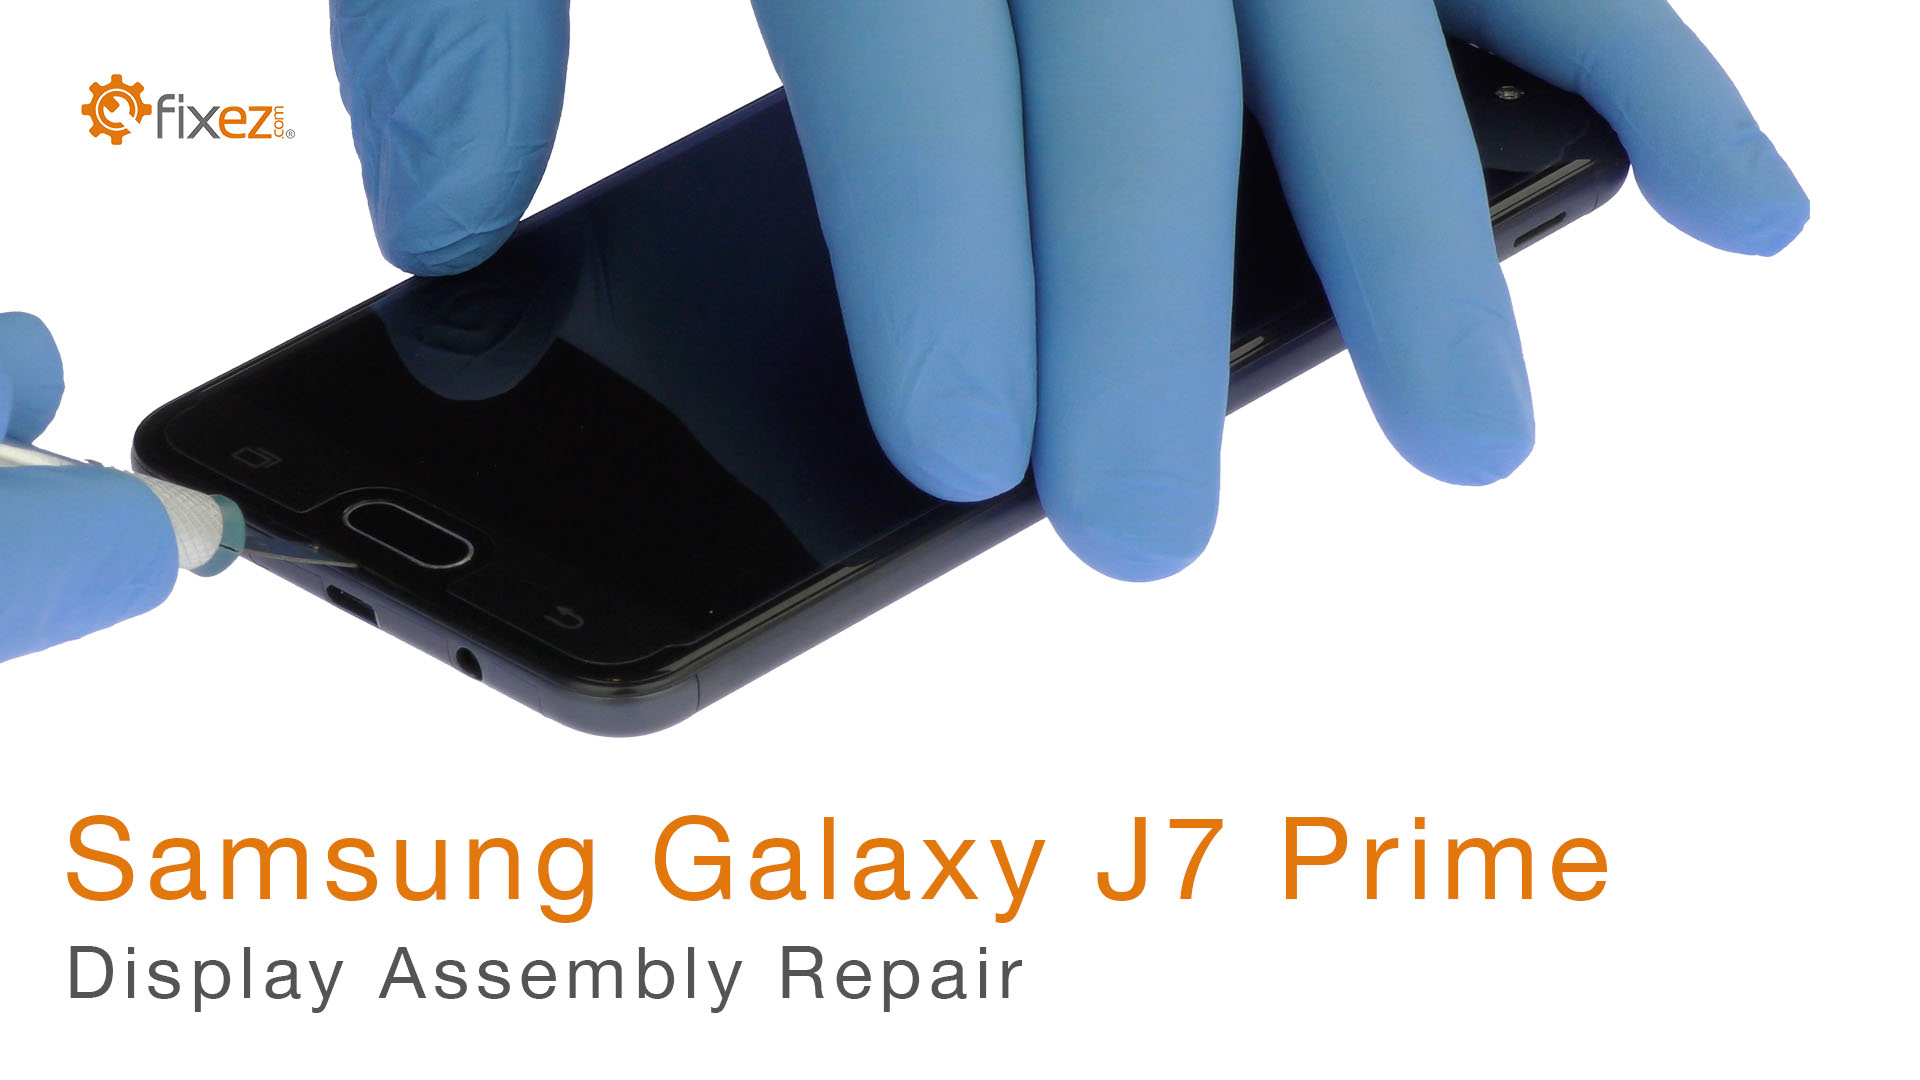 Samsung Galaxy J7 Prime Display Assembly Repair